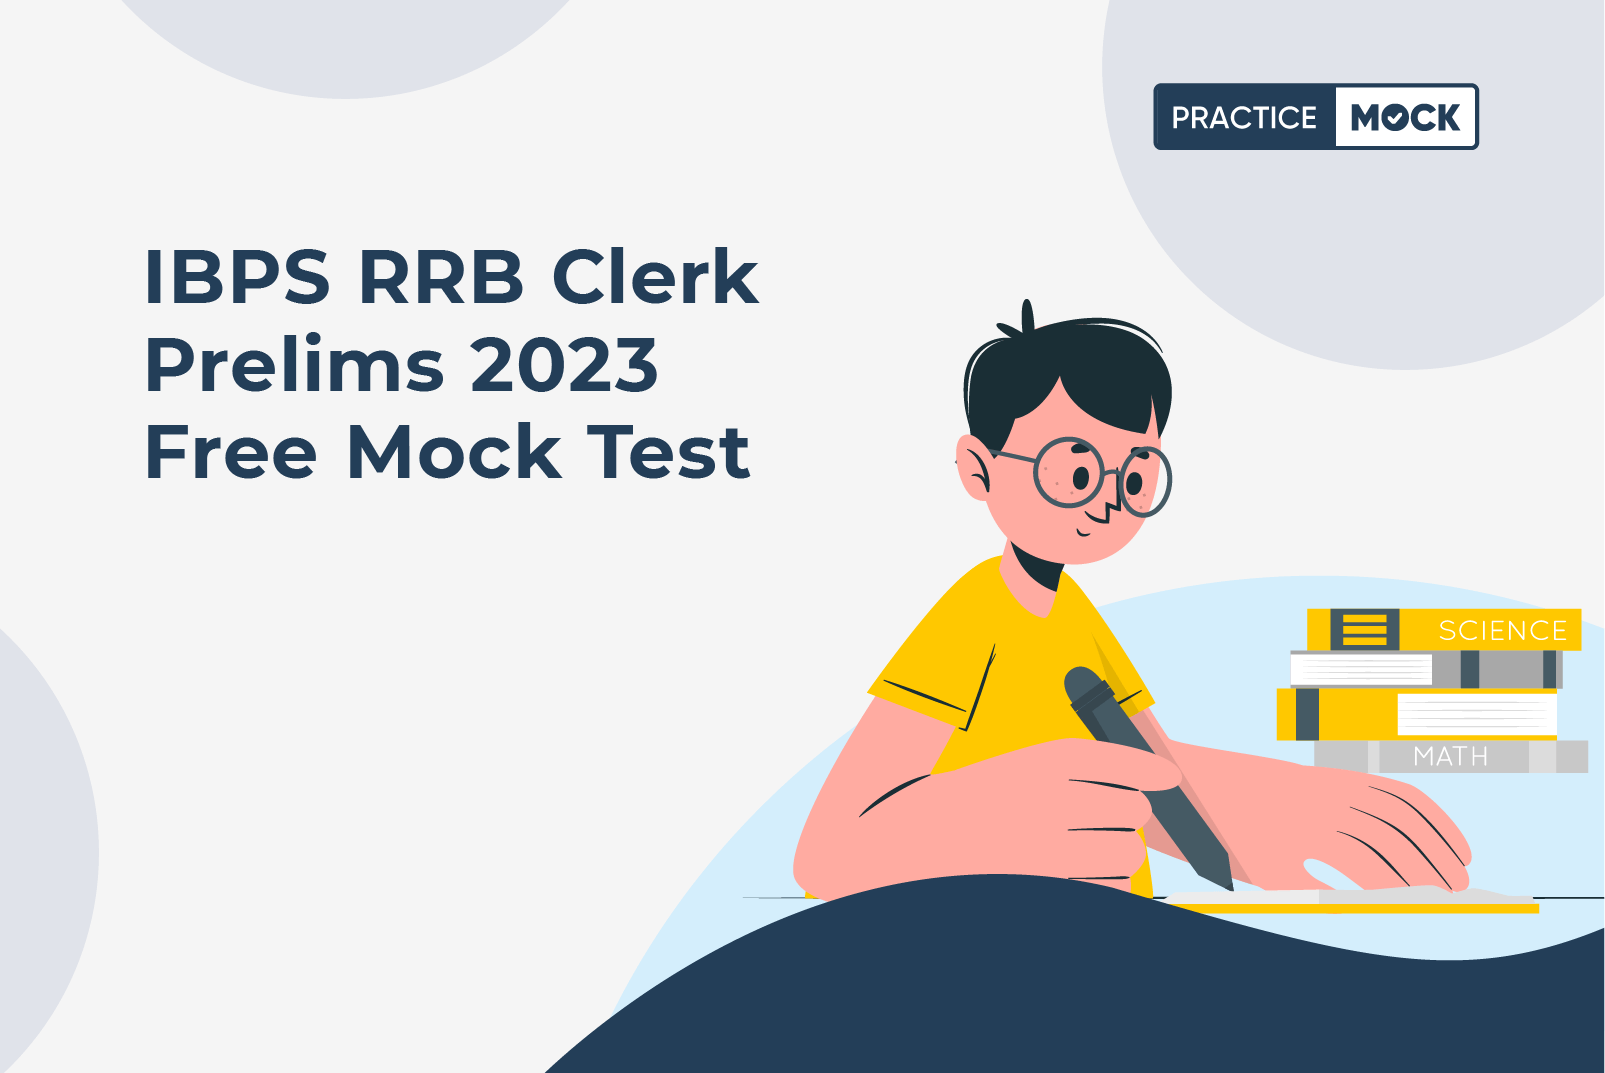 ibps-rrb-clerk-prelims-2023-free-mock-test-practicemock